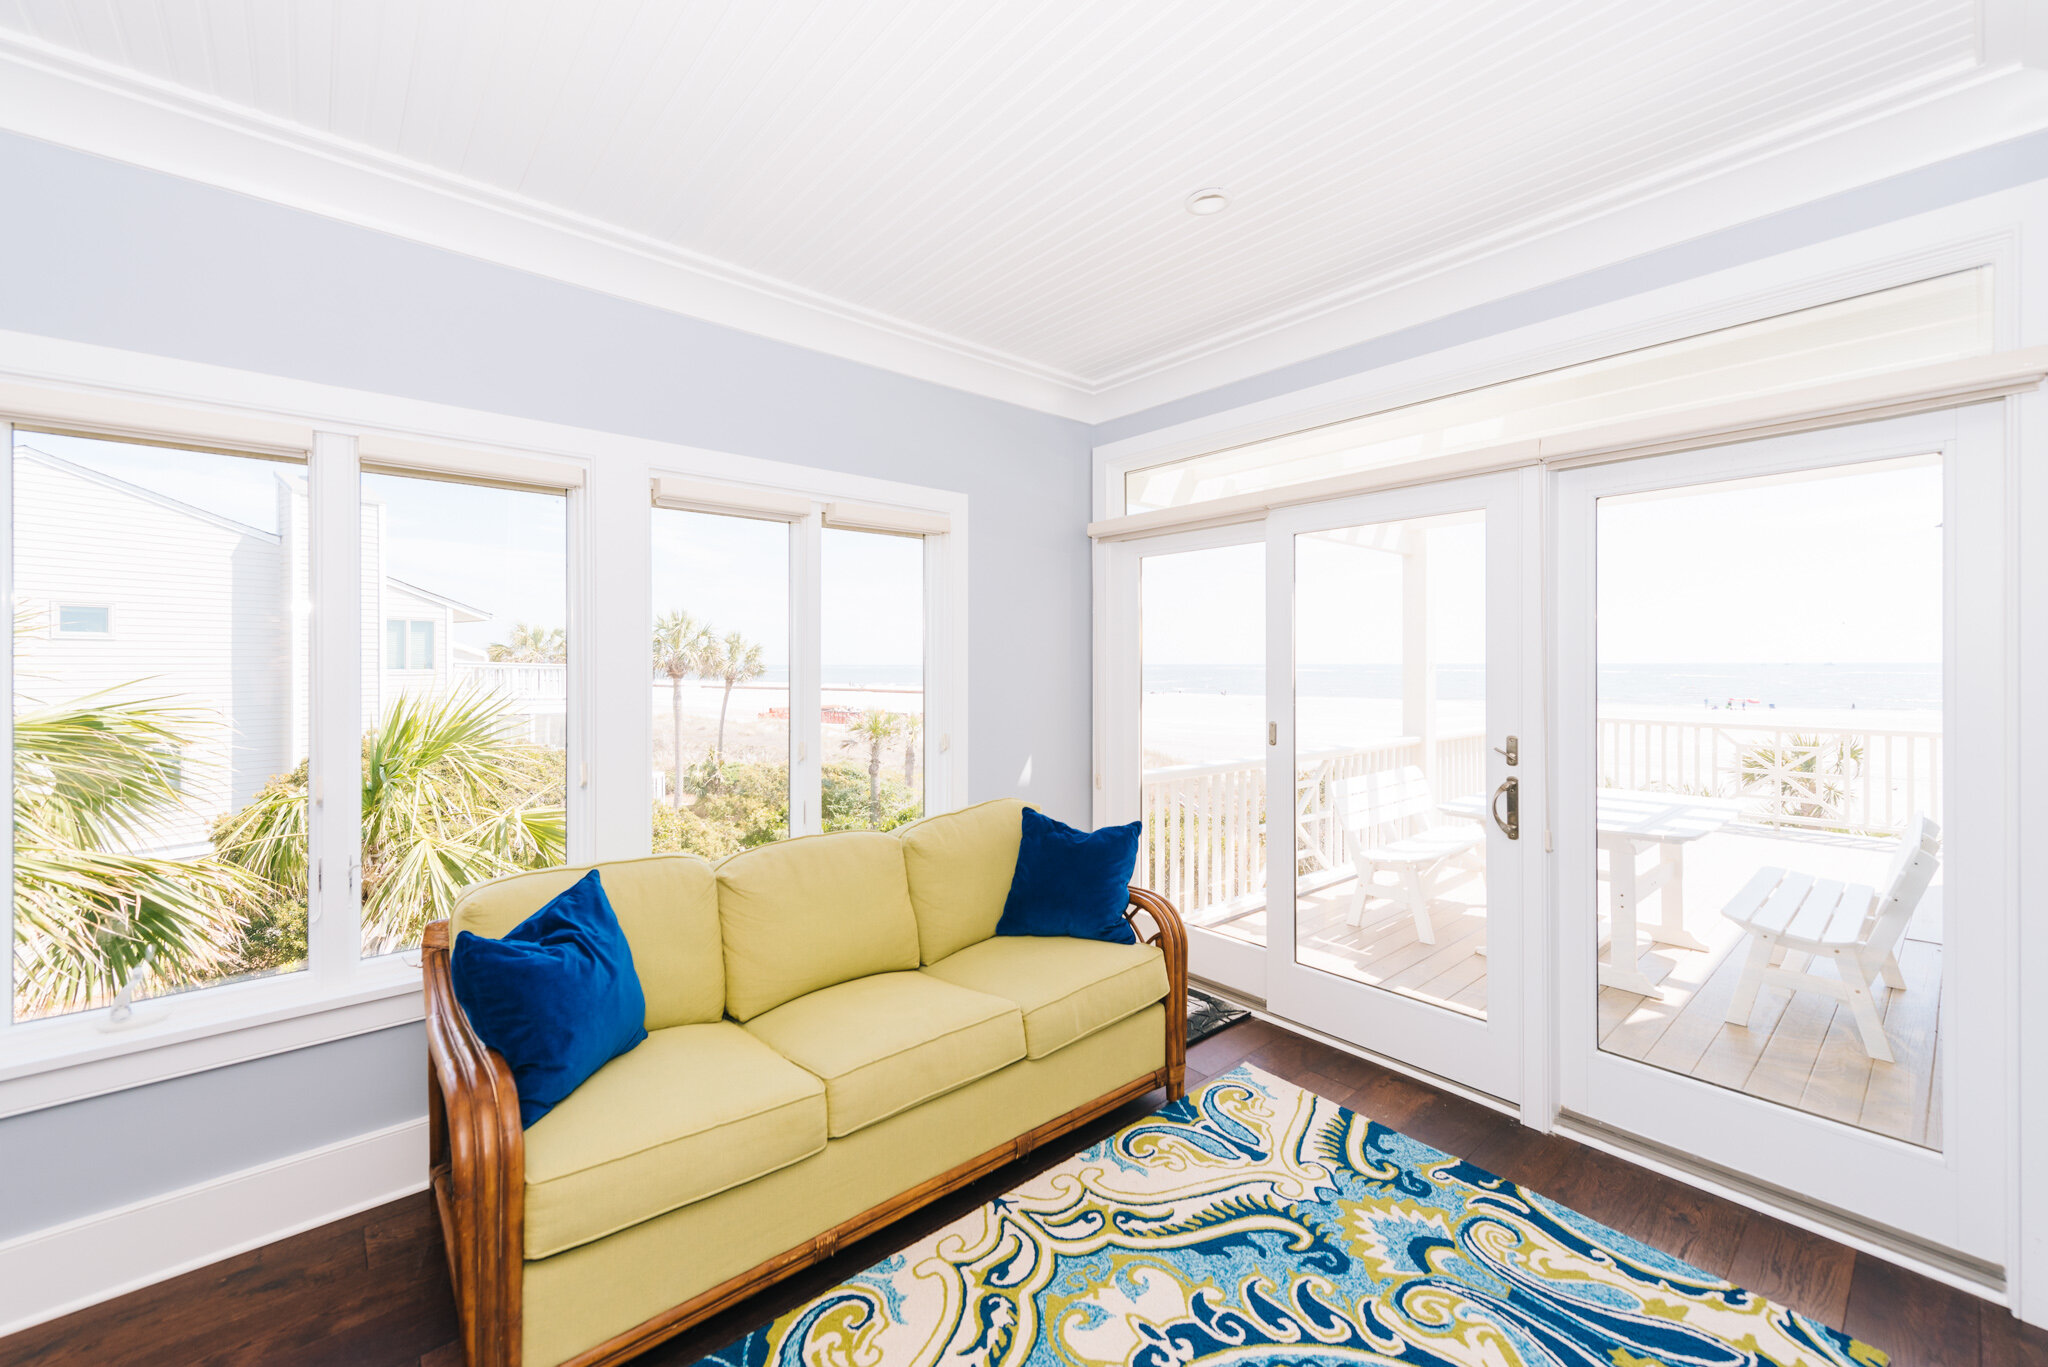 Dwell-Chic-Bright-Coastal-Home-Sun-Room-Overall.jpg